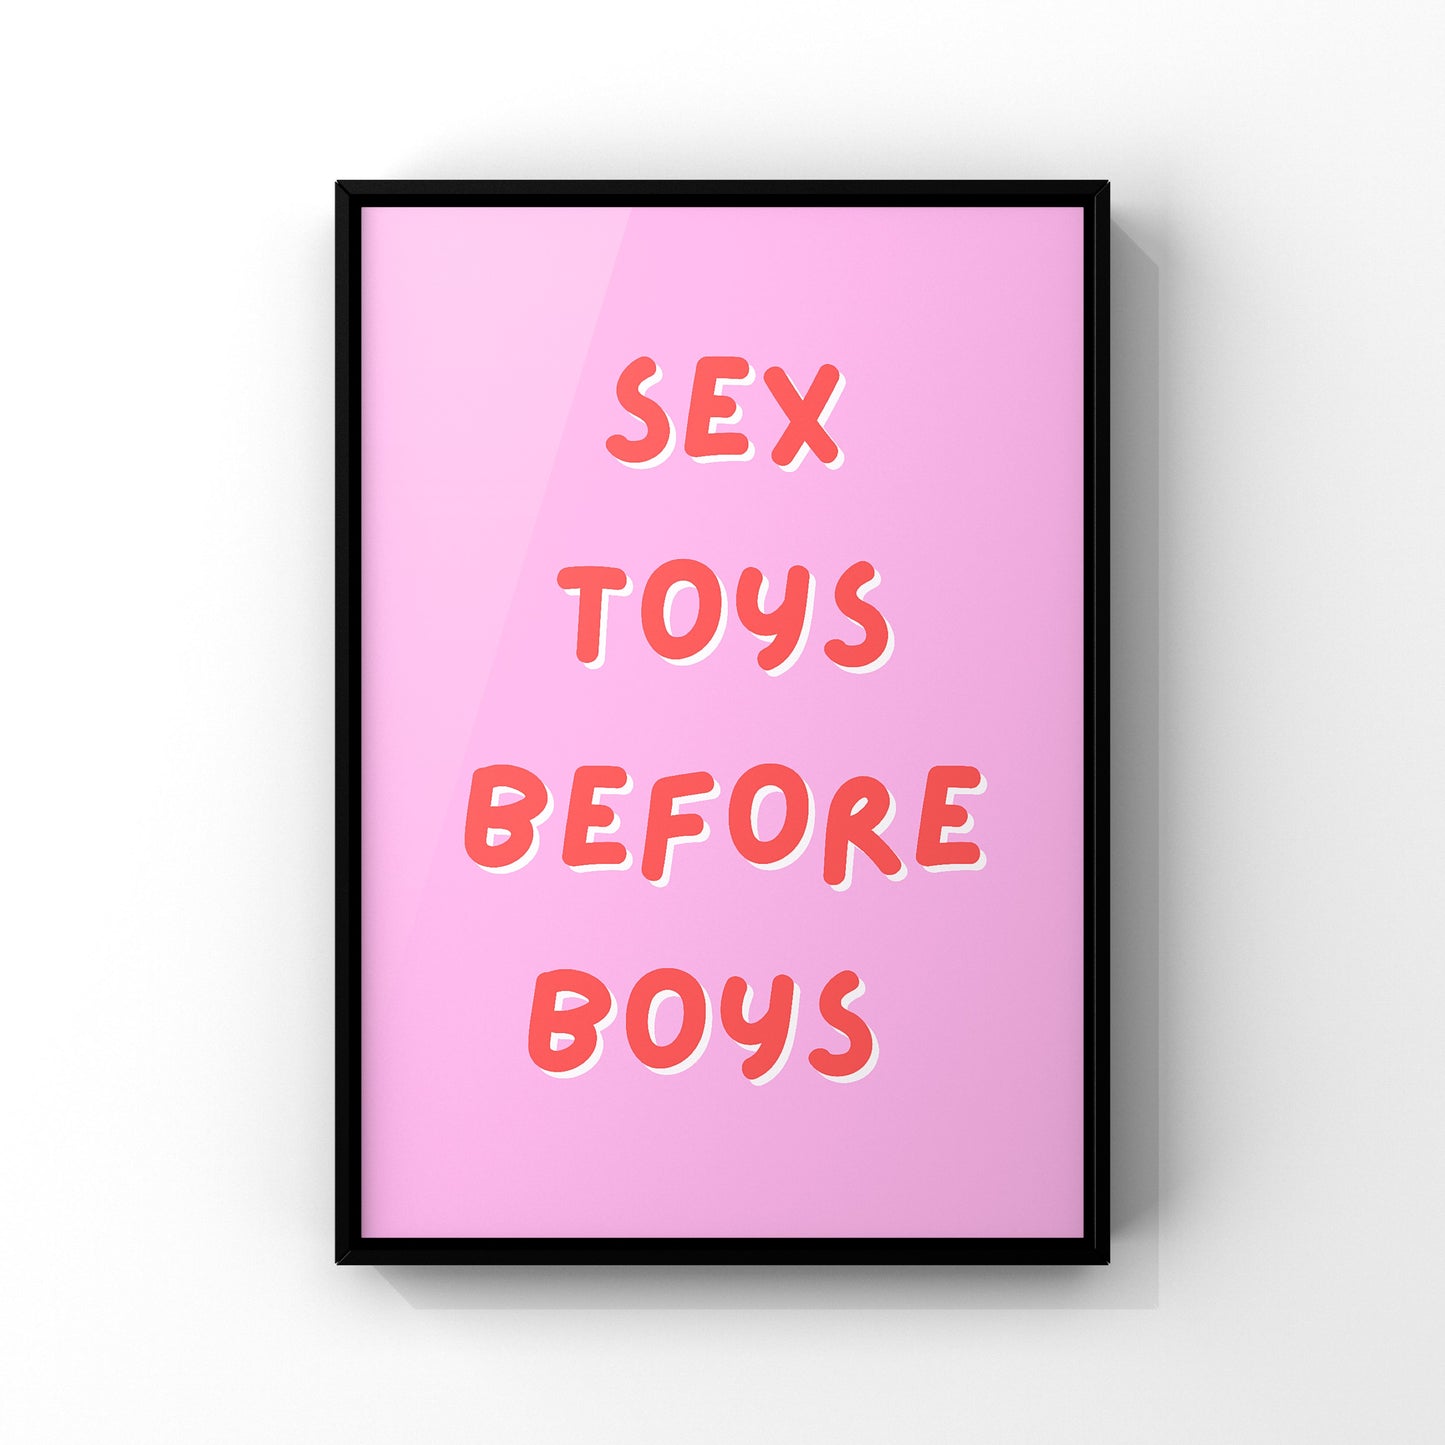 Sex toys before boys